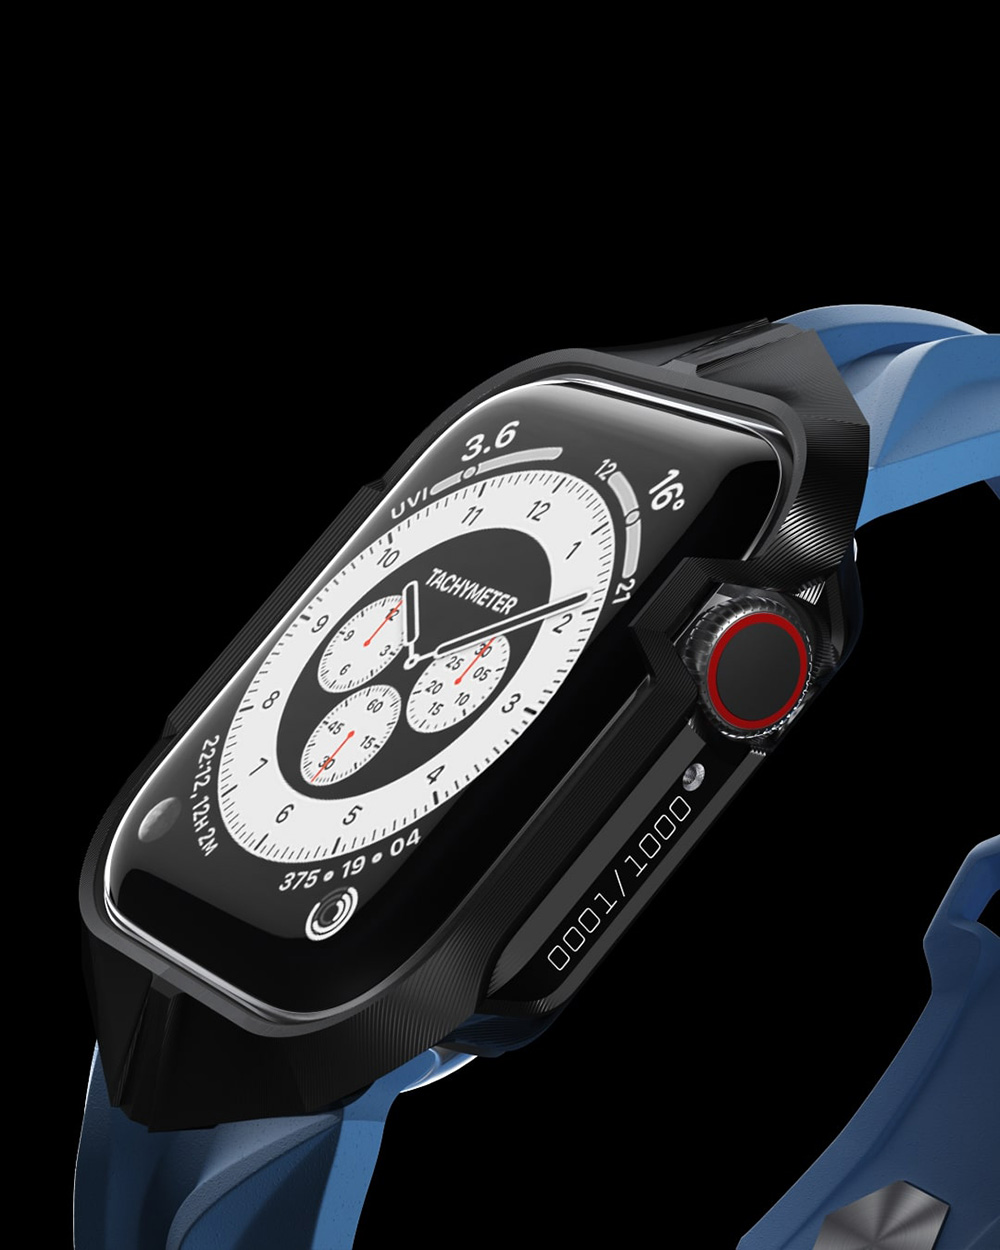 Blue and Black Cyberwatch Case on Apple Watch